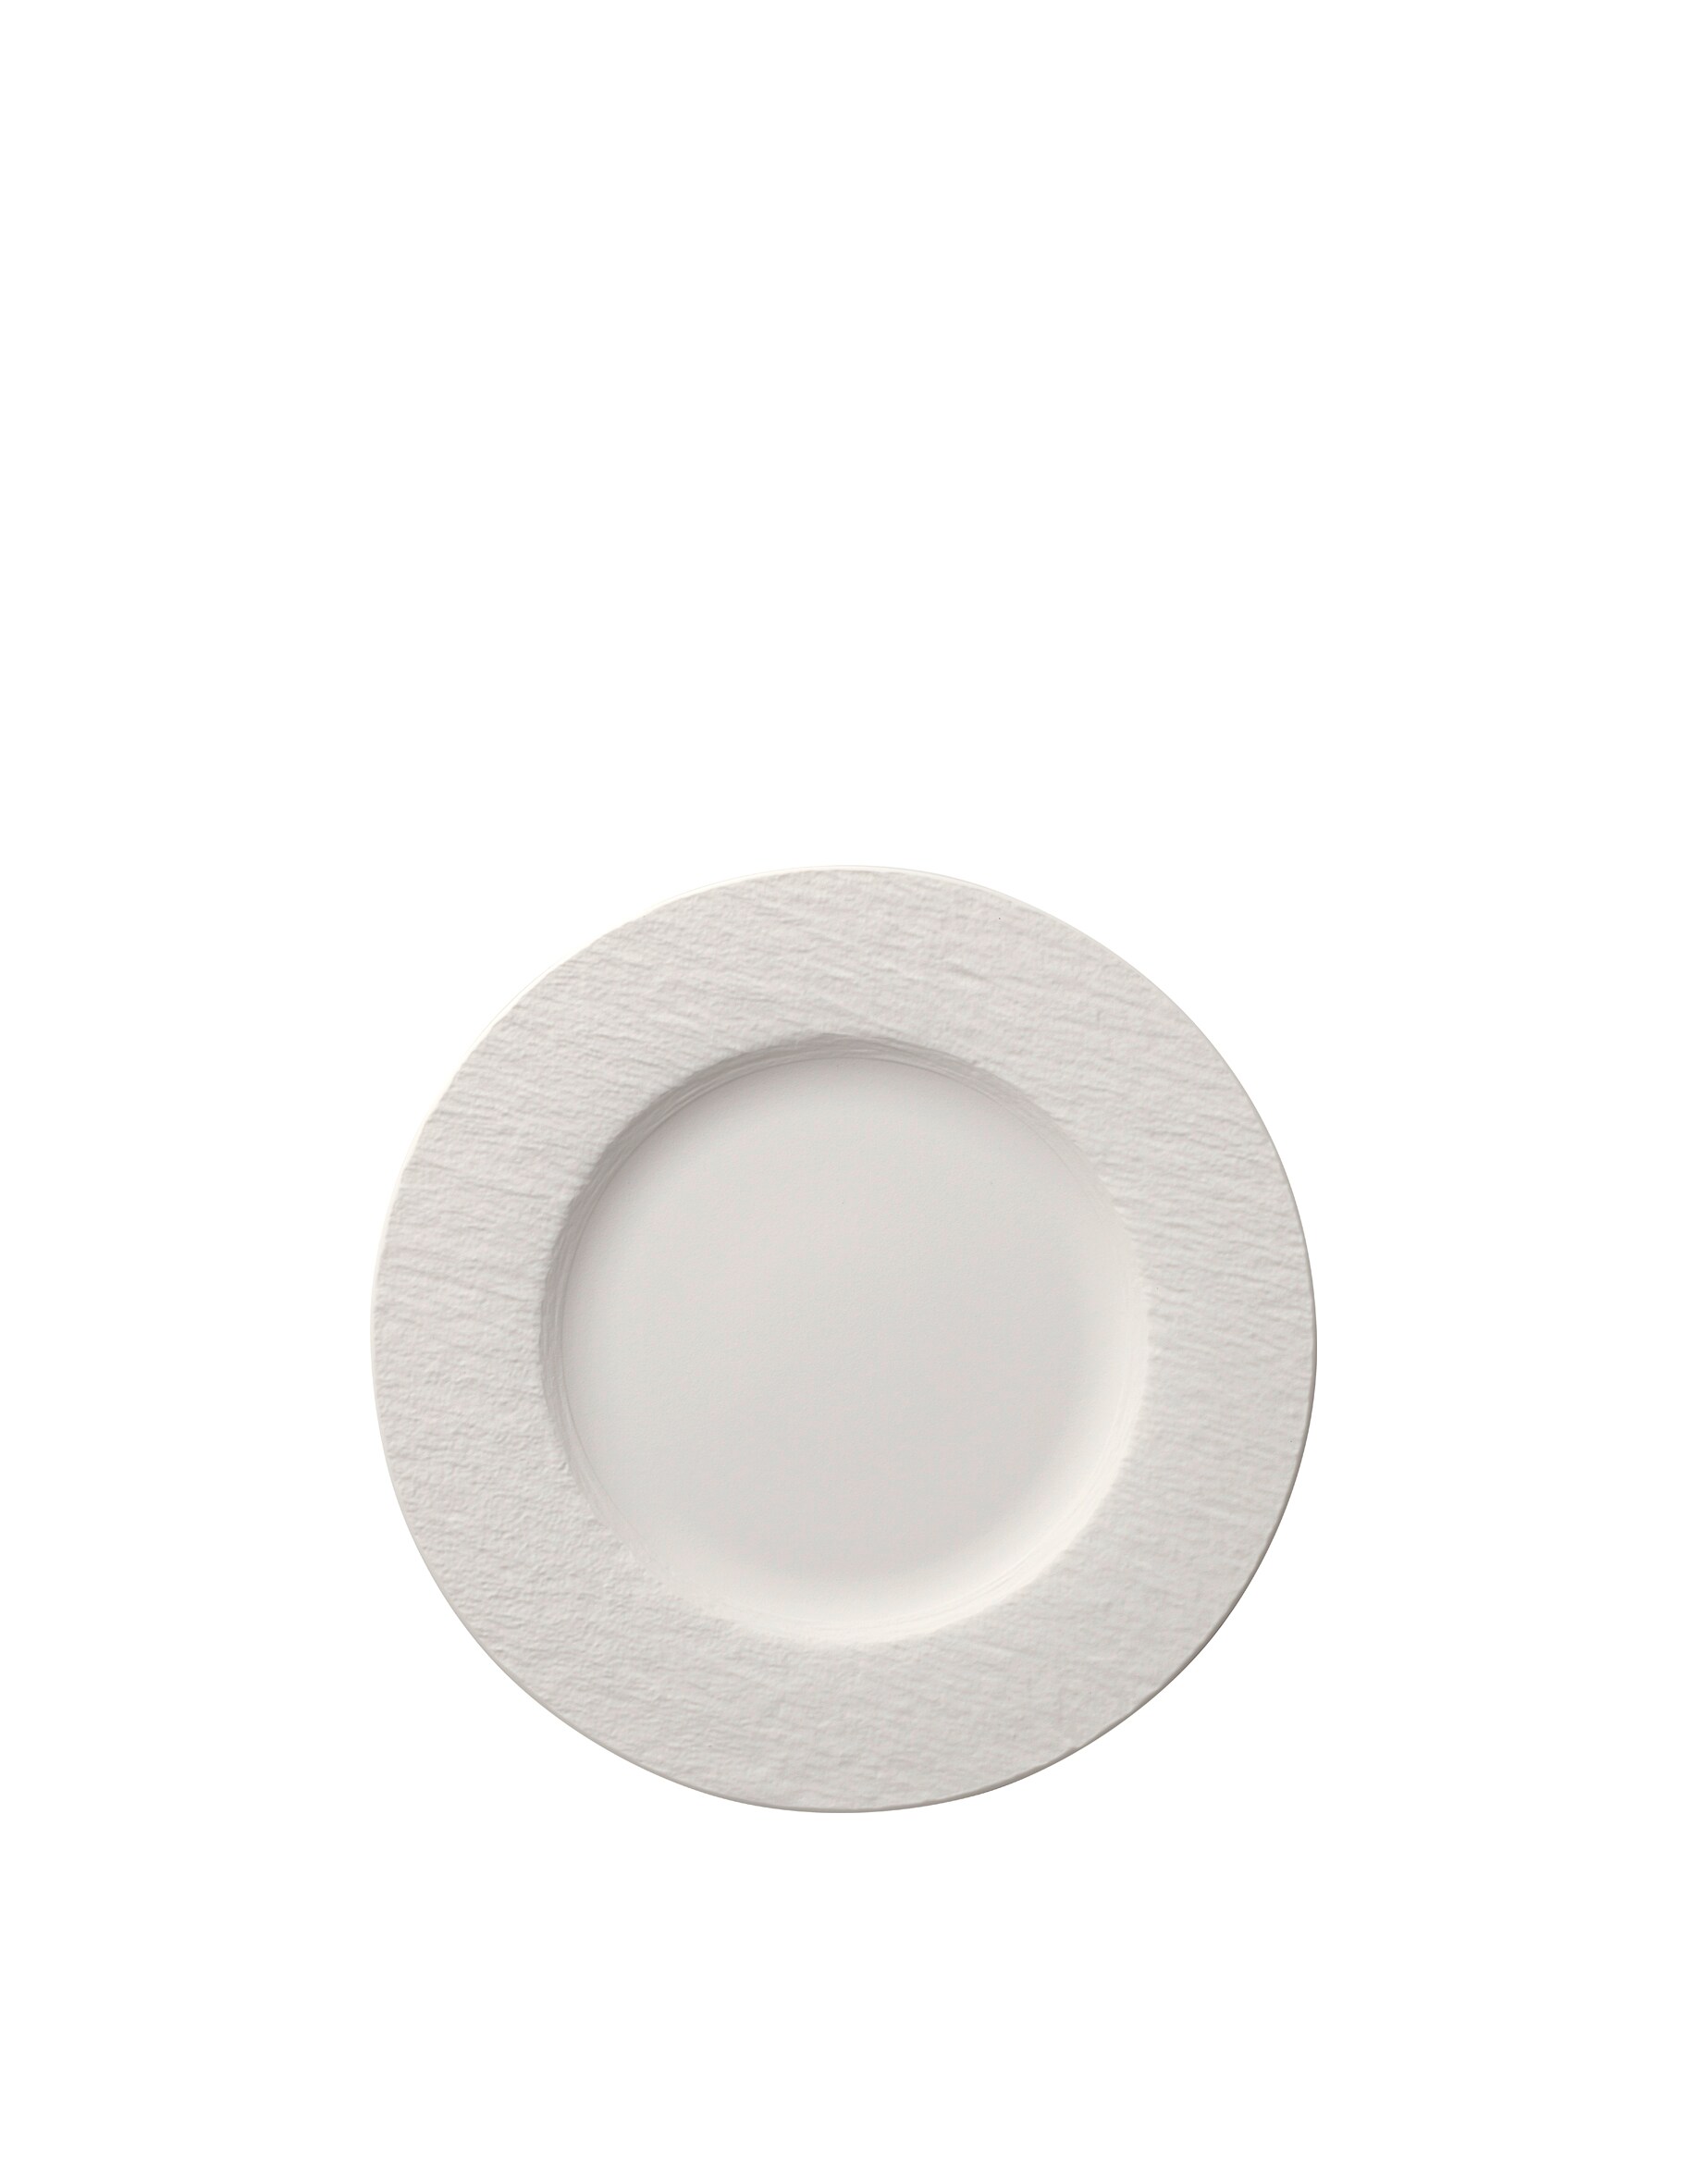 Плоская тарелка Manufacture Rock Blanc 27см Villeroy & Boch тарелка для макарон manufacture rock blanc 29см villeroy